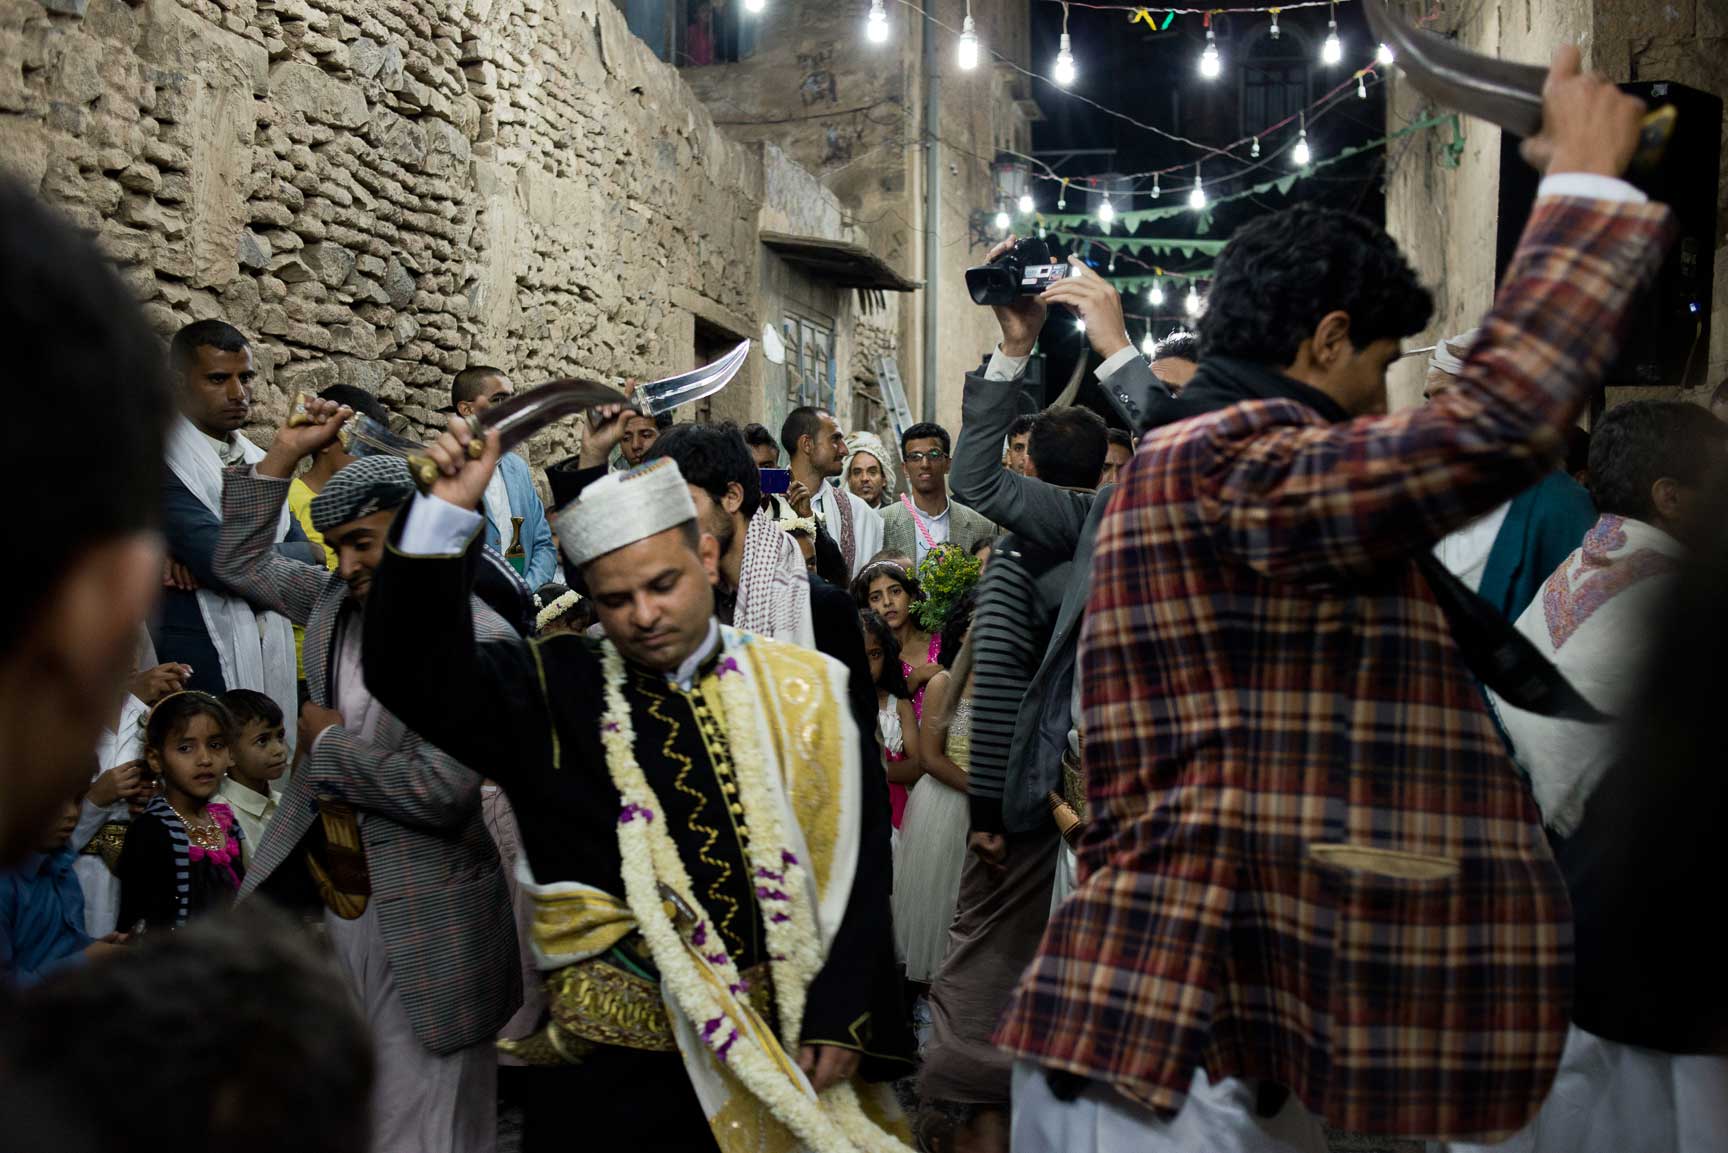 Yemeni men dance the bara'a, a traditional tribal dance of northern Yemen for a wedding celebration on June 4, 2015 in Sana'a, Yemen.